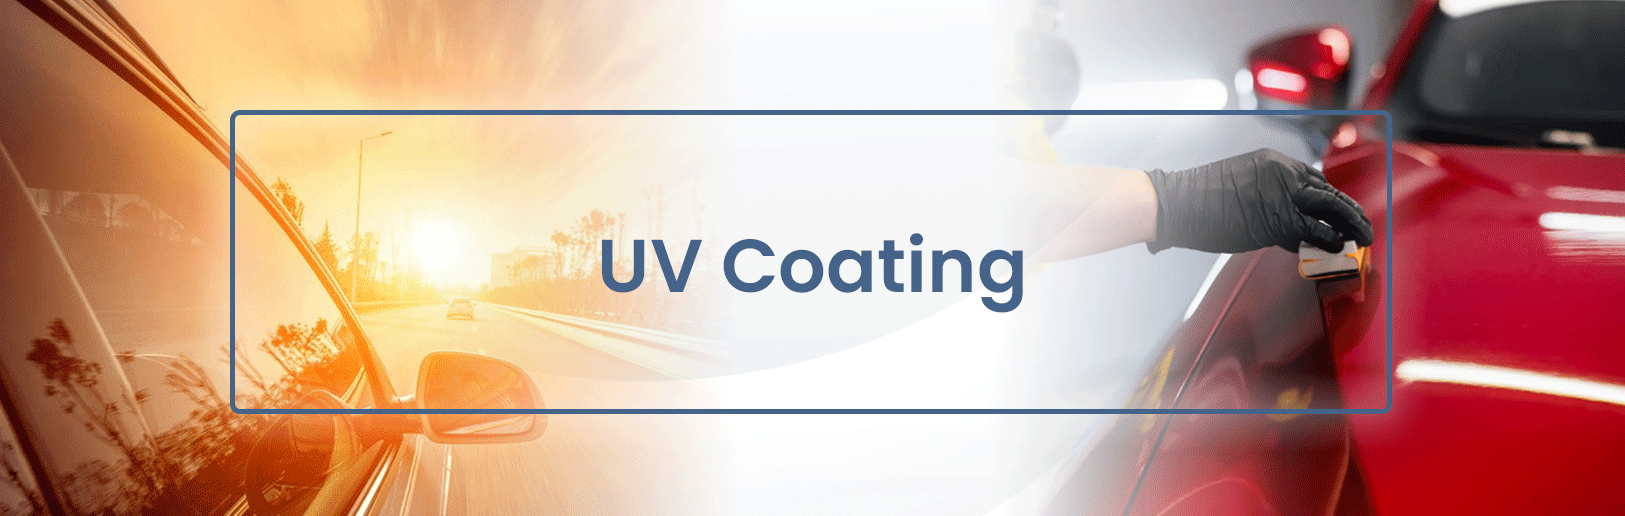 UV Coating﻿ chemicals